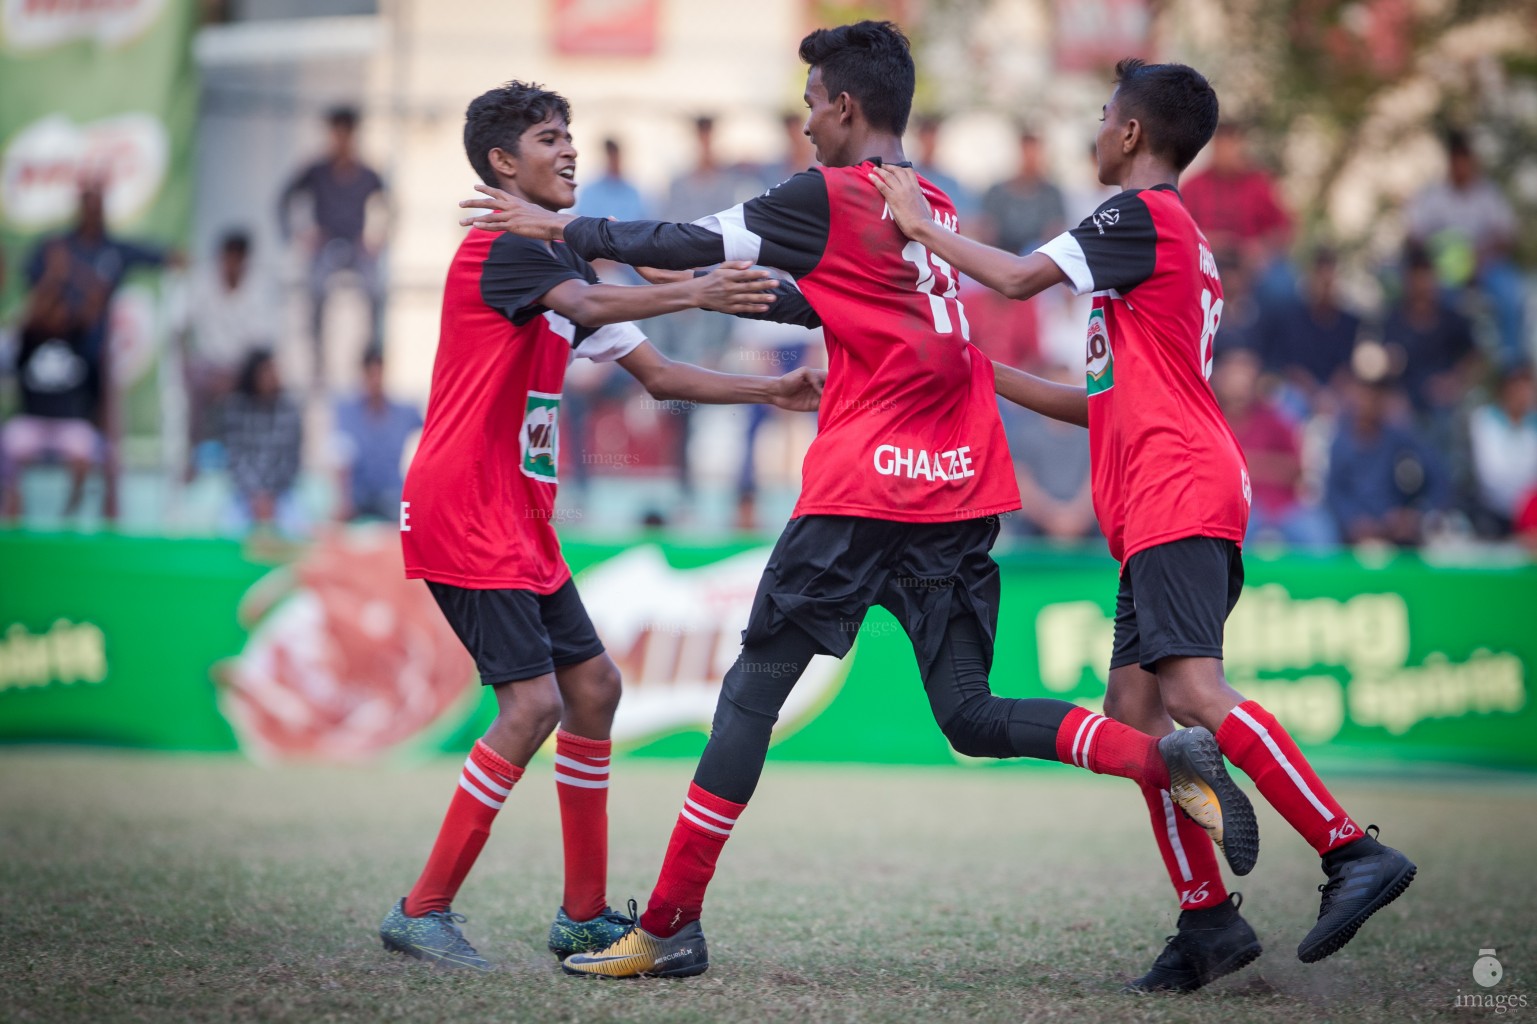 MILO Interschool Football Tournament 2018 / U16 (Ghaazee School vs Dharumavantha School